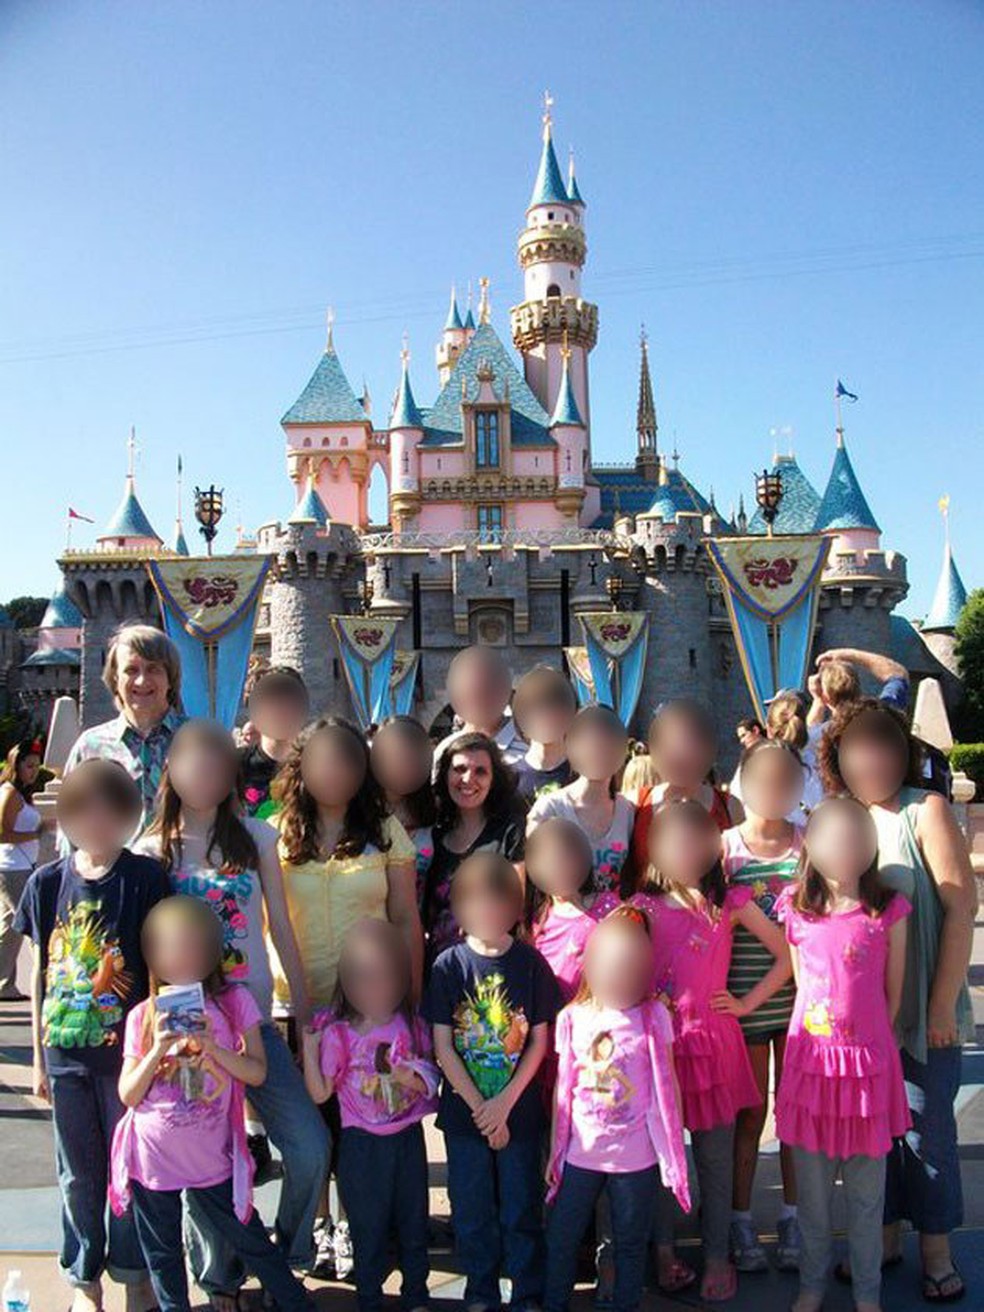  Várias fotos mostram a família visitando a Disney (Foto: David-Louise Turpin/Facebook)